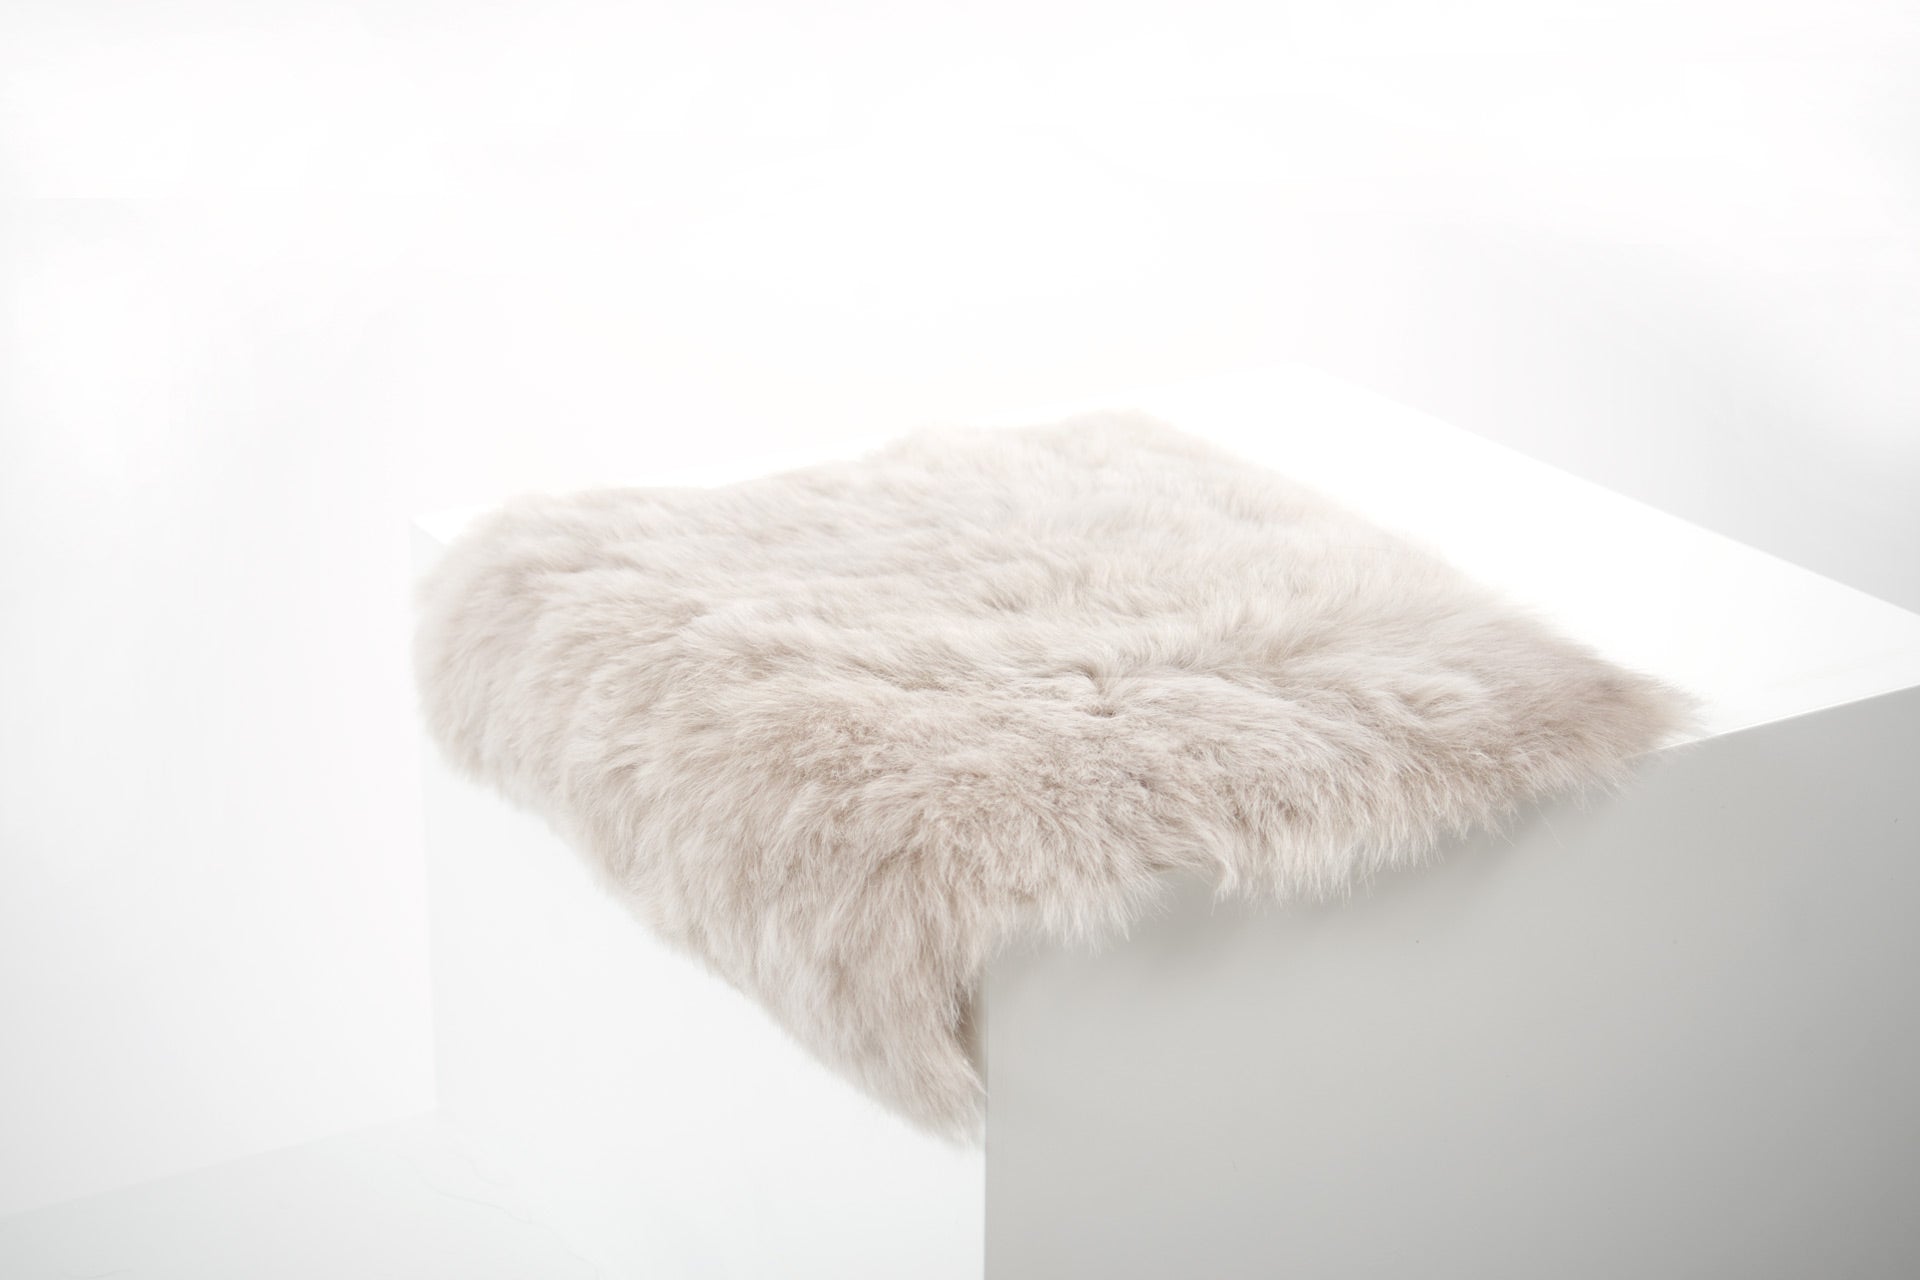 Shorn Linen Icelandic Sheepskin Chair Pad - Black Sheep (White Light)